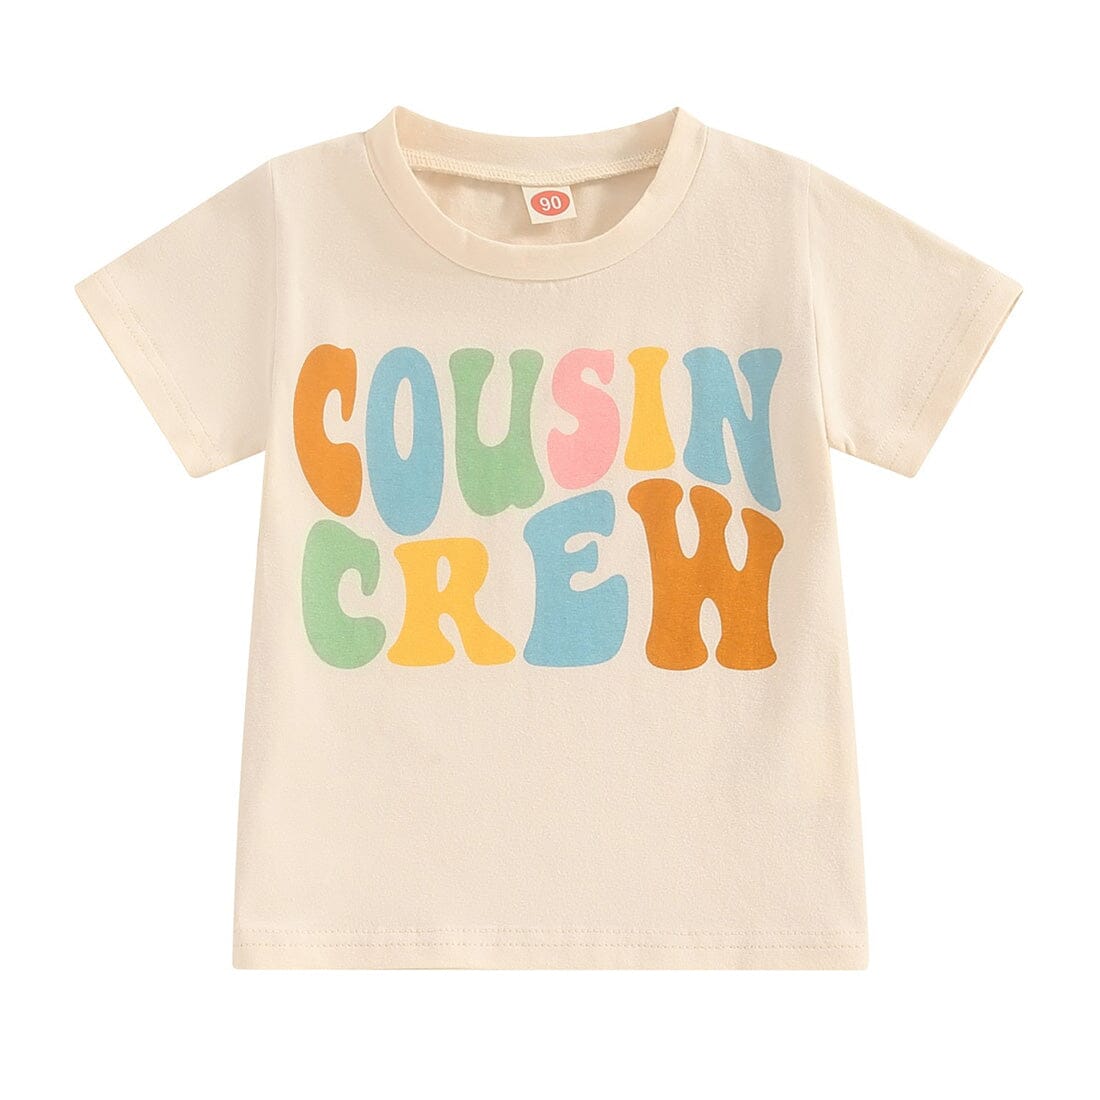 Cousin Crew Toddler Tee   